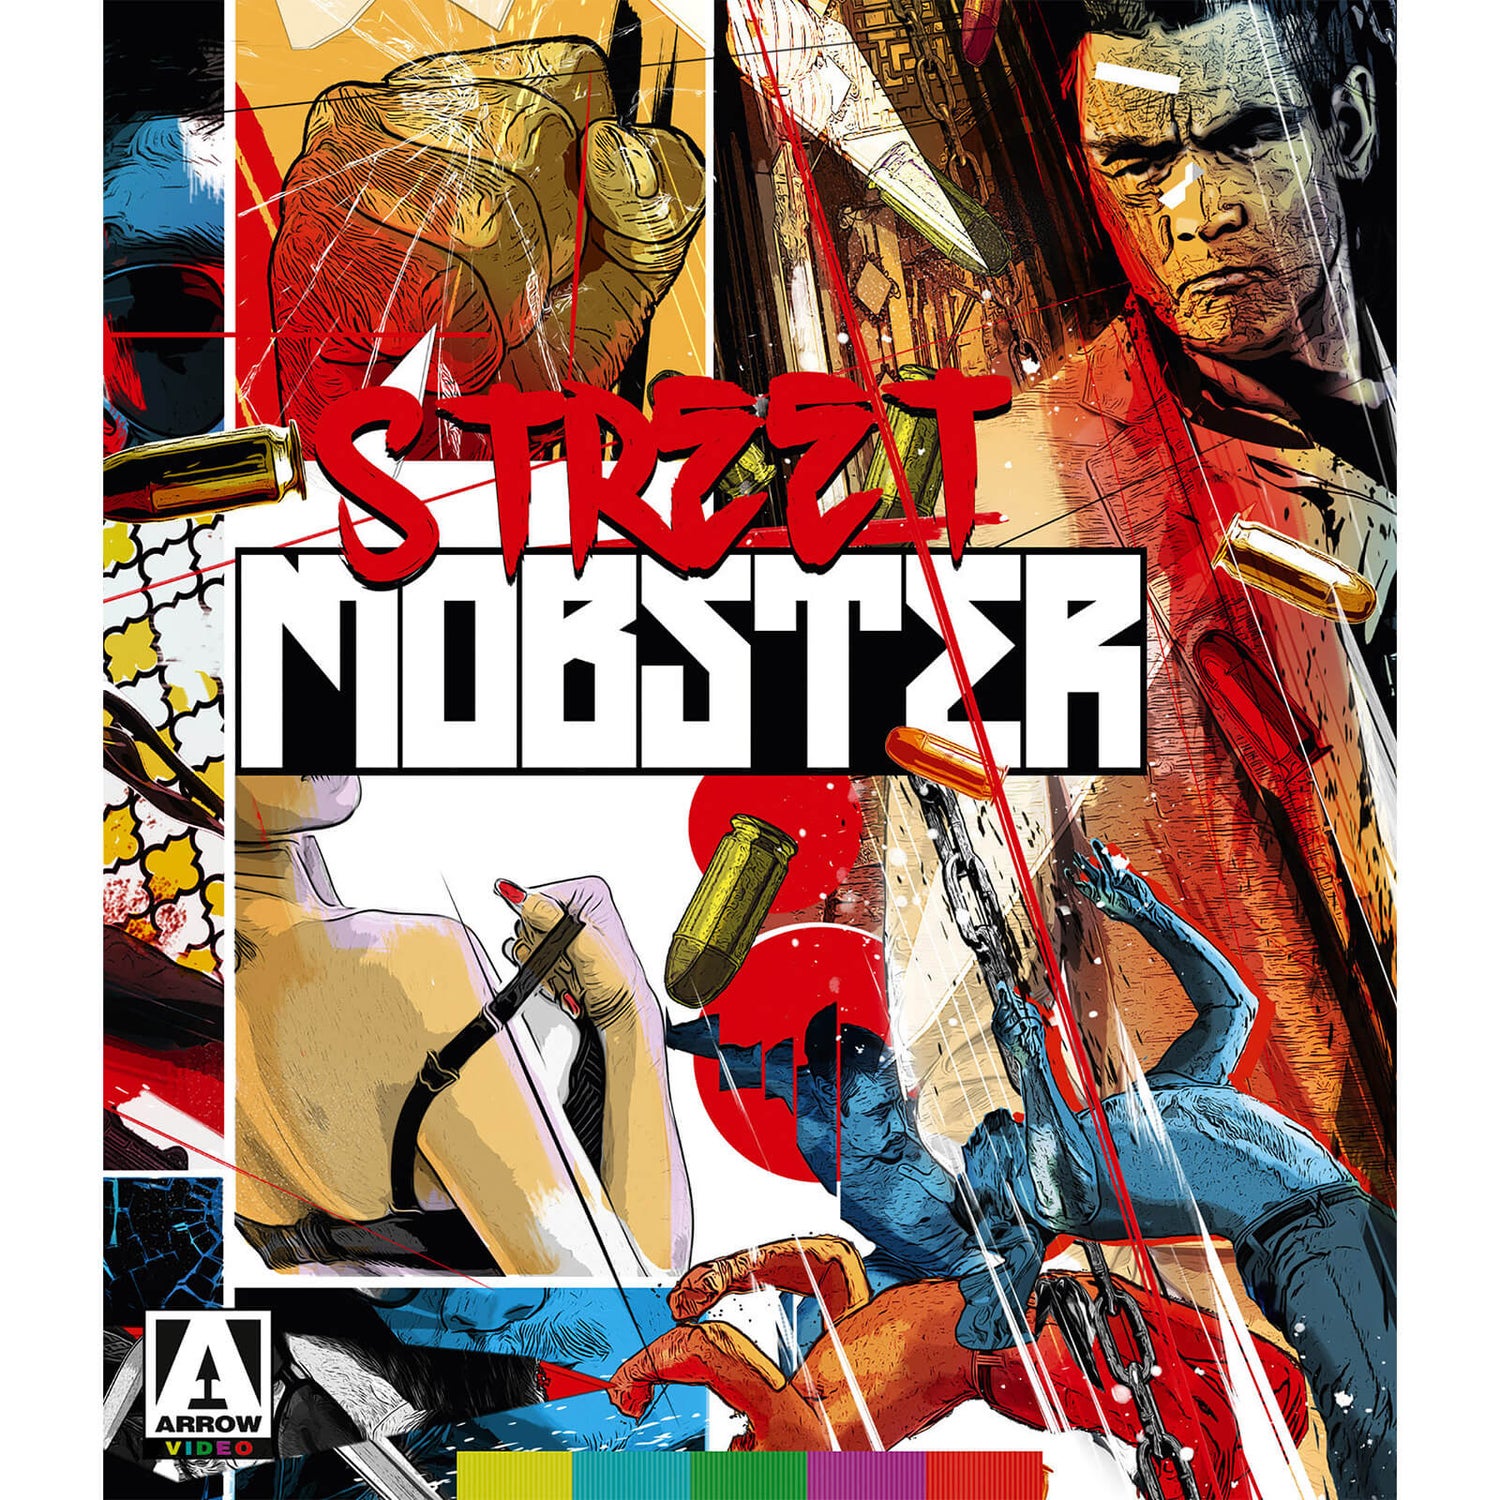 Street Mobster Blu-ray